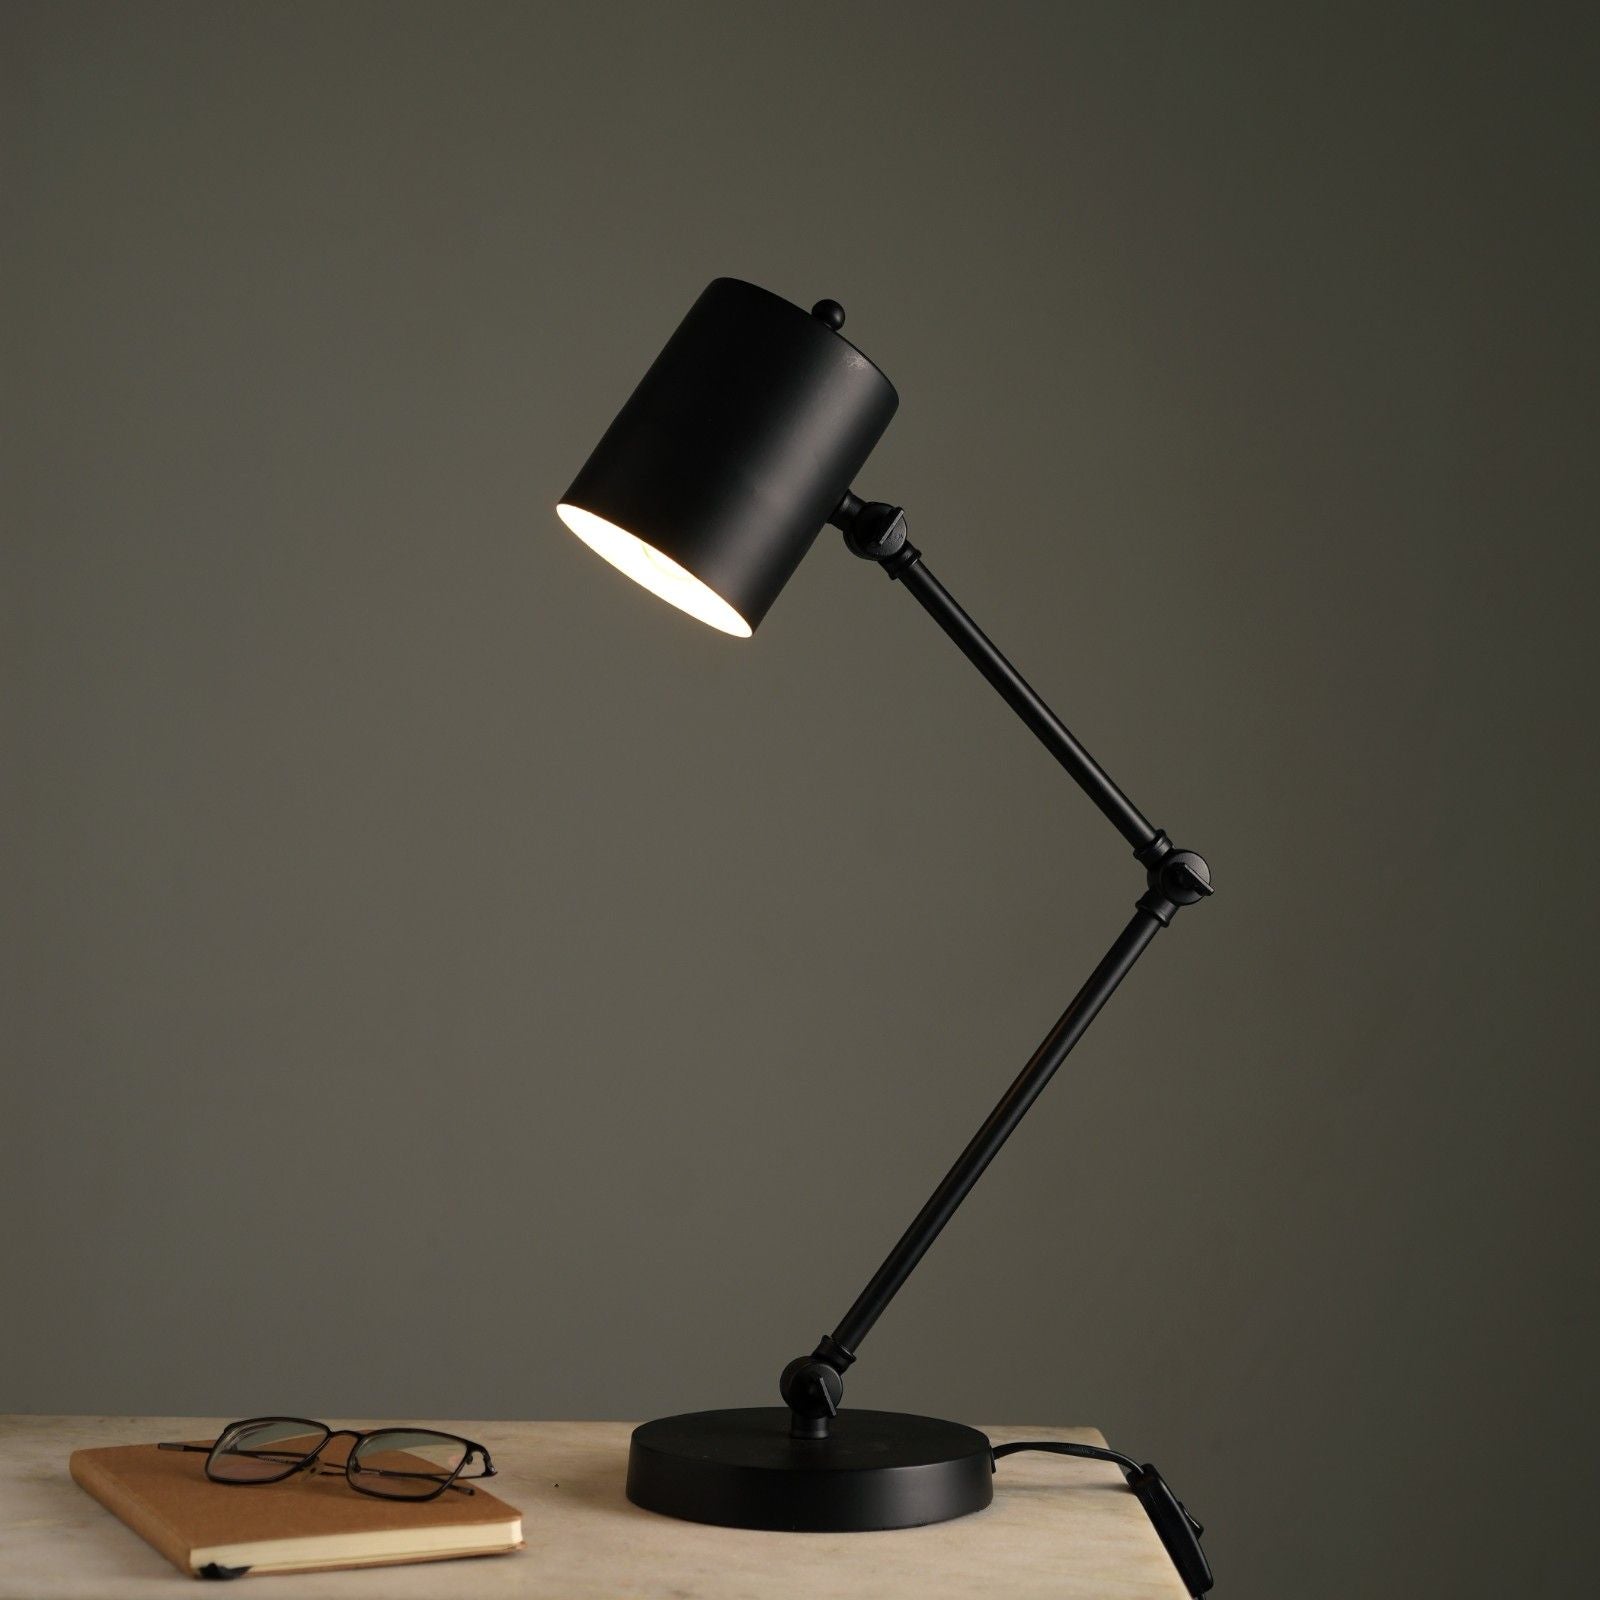 Book Boom Lamp - Black, Modern Scandinavian Design, Premium Metallic Finish, Elegant Swivels